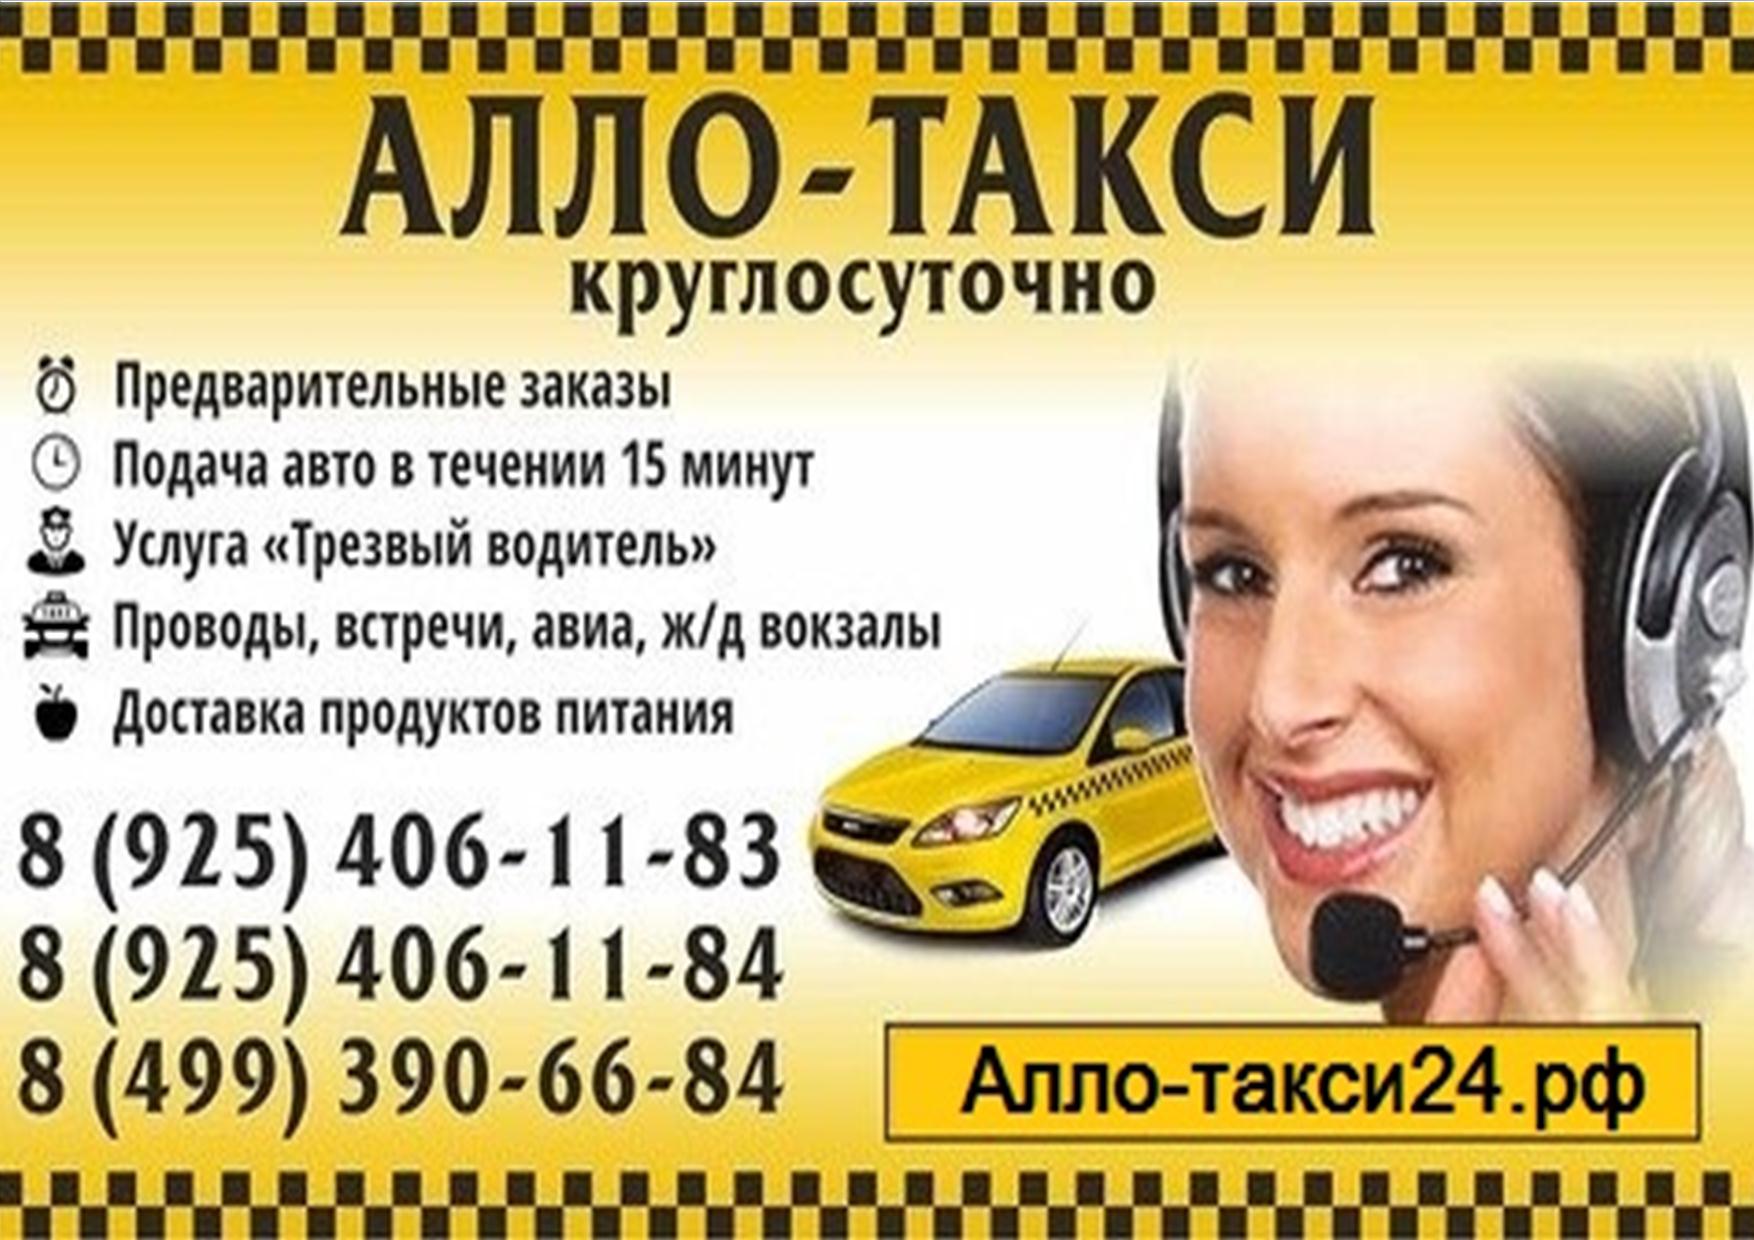 Такси новочебоксарск номера. Реклама такси. Объявление такси. Визитка такси. Таксист реклама.